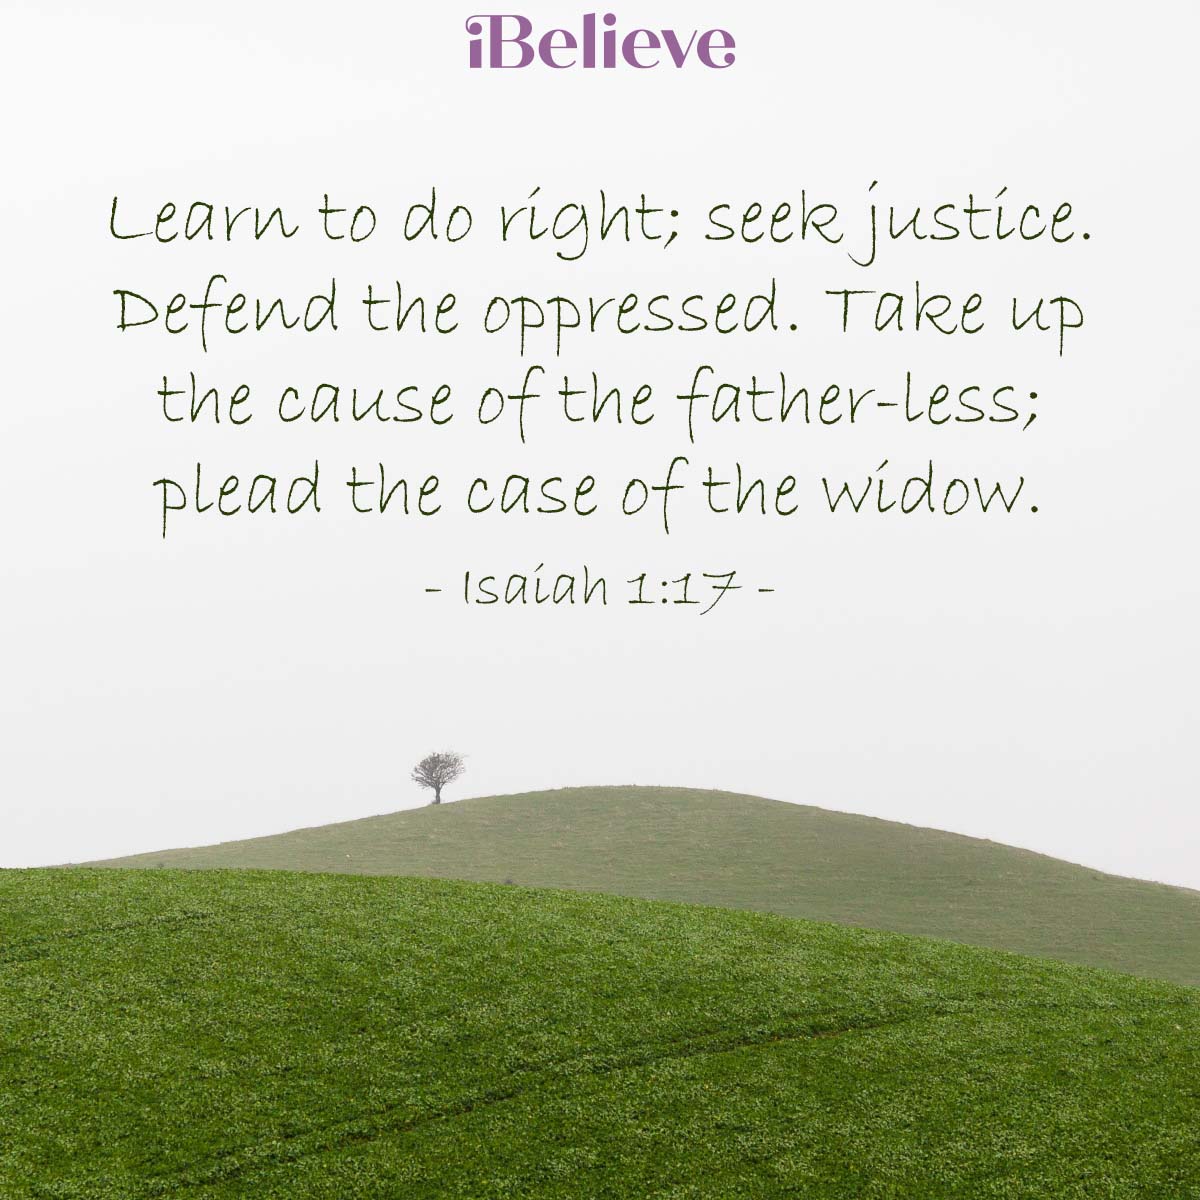 Isaiah 1:17, inspirational image